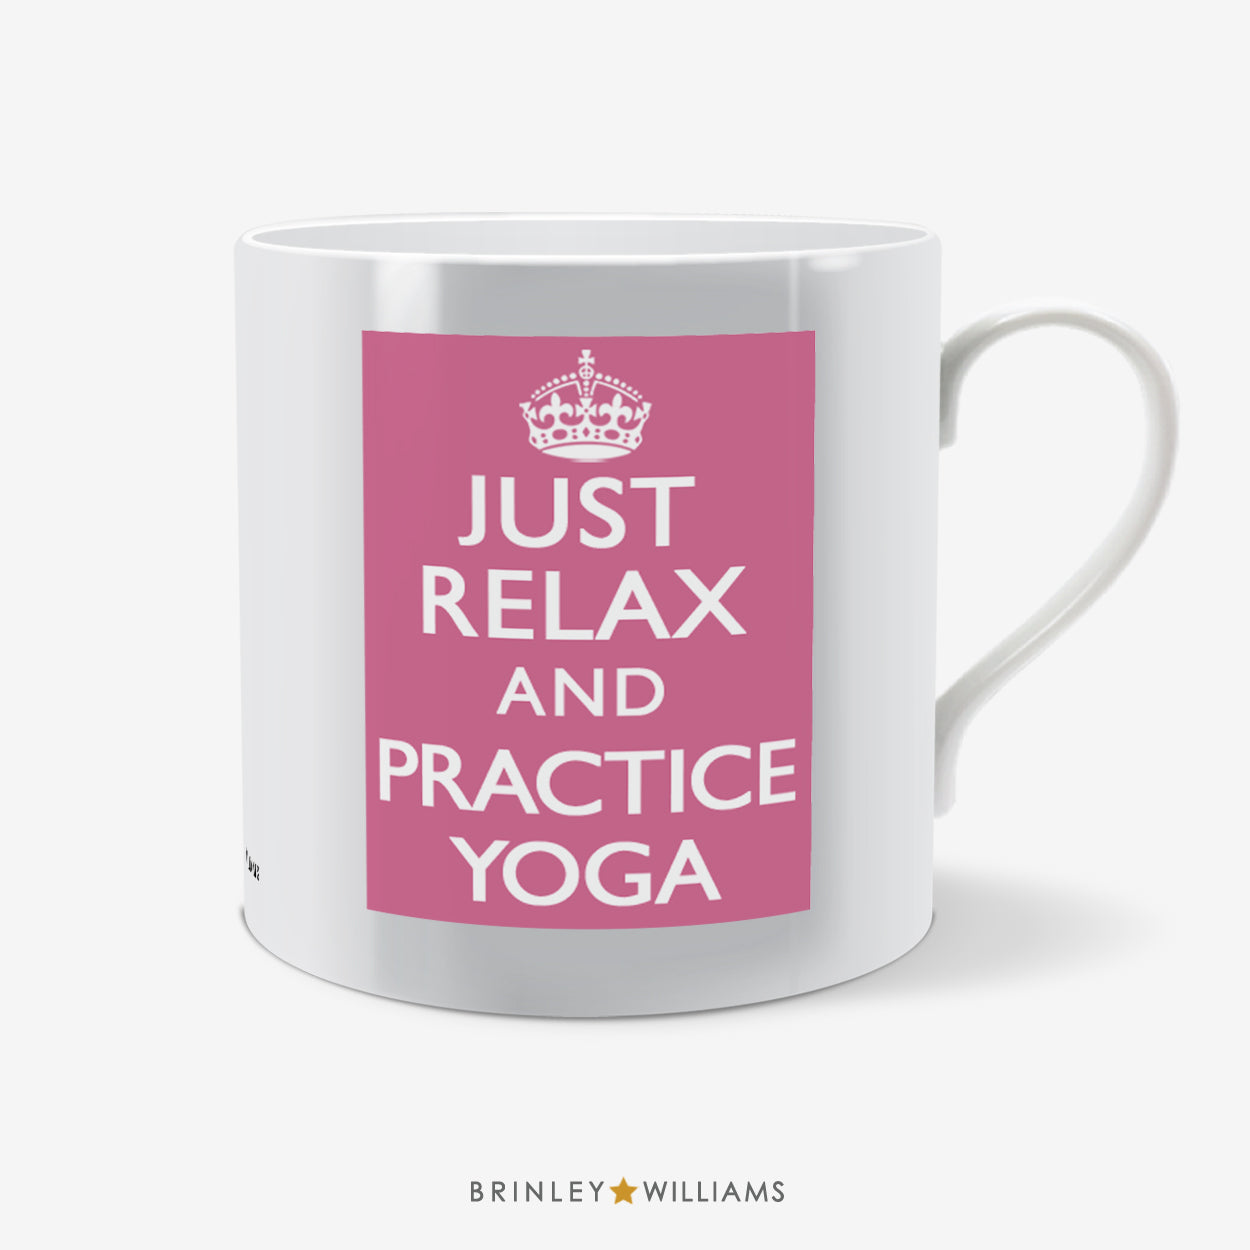 Just relax and practise Yoga Fun Mug - Pink